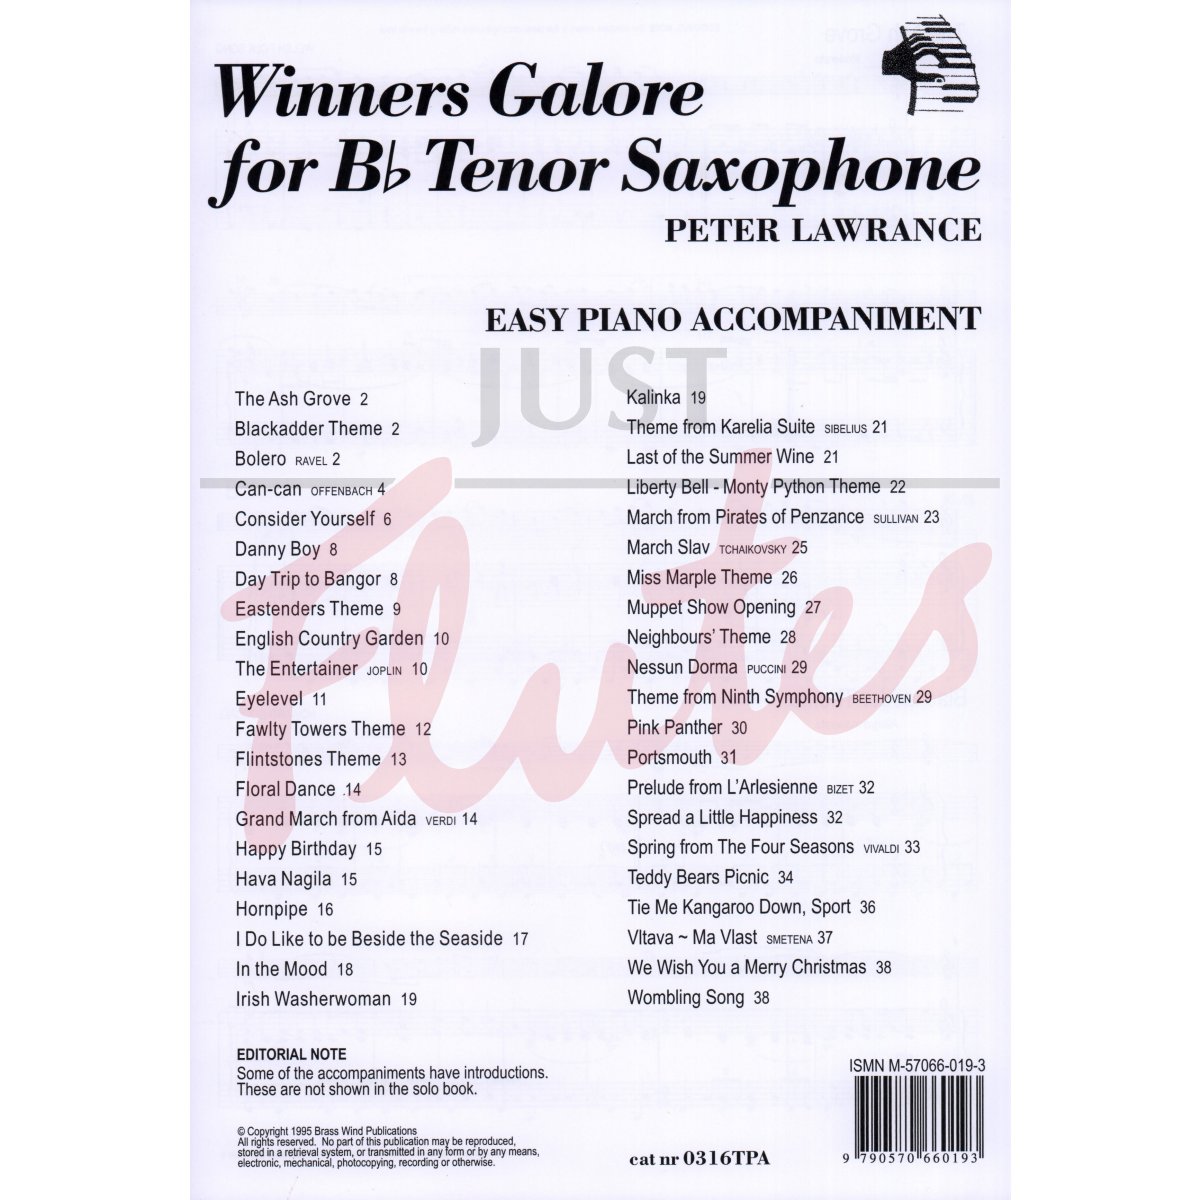 Winners Galore for Tenor Saxophone - Piano Accompaniment Part